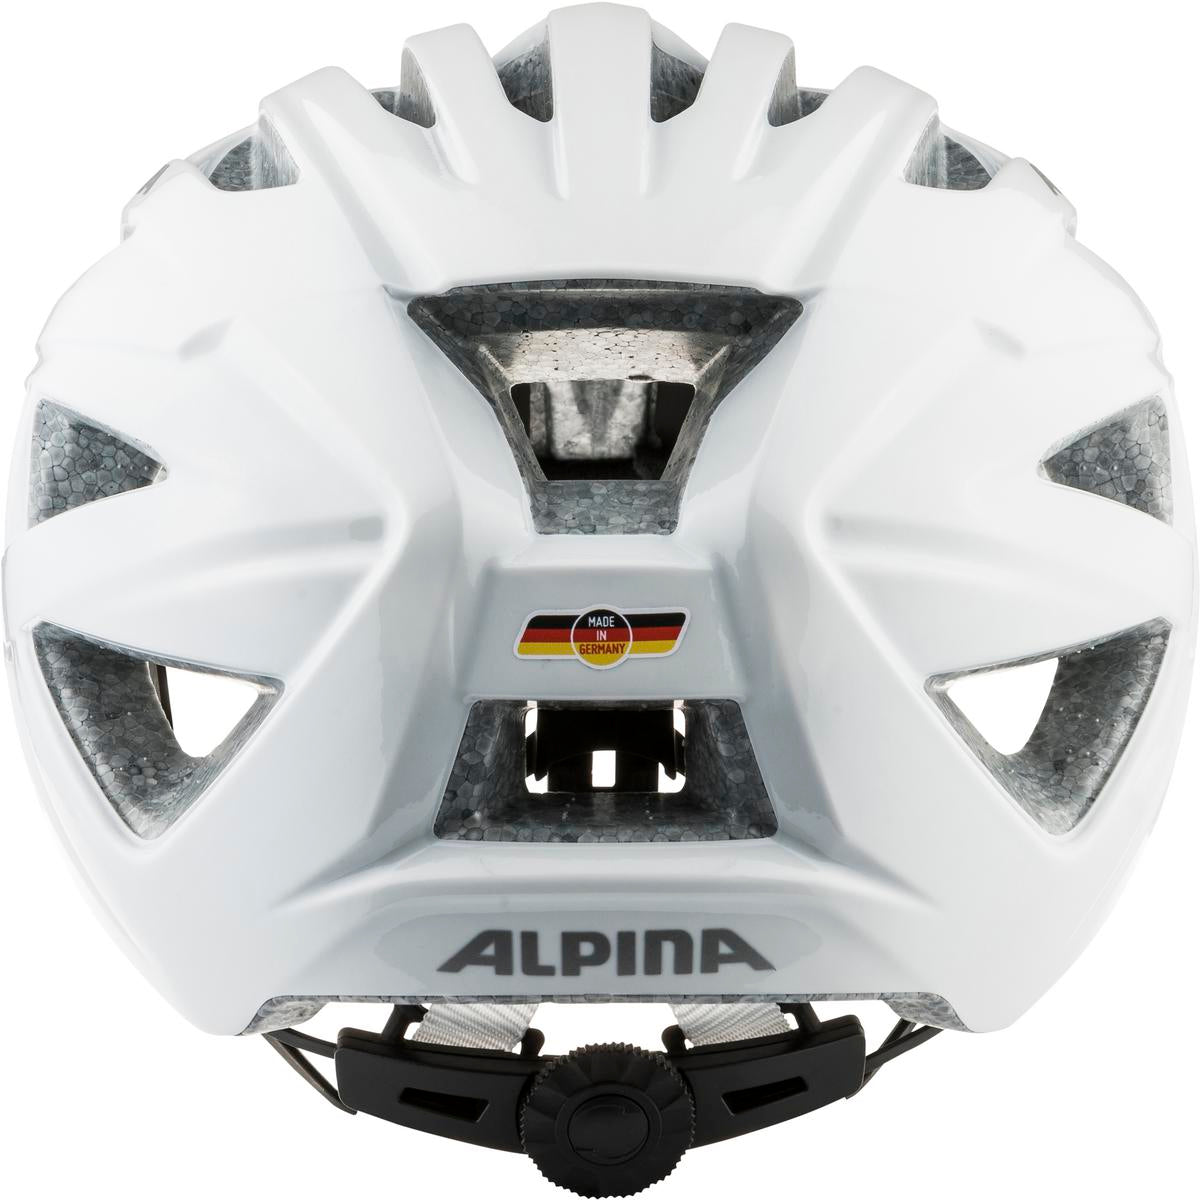 Alpina - Parana - Garage/Velos-Motos Allemann